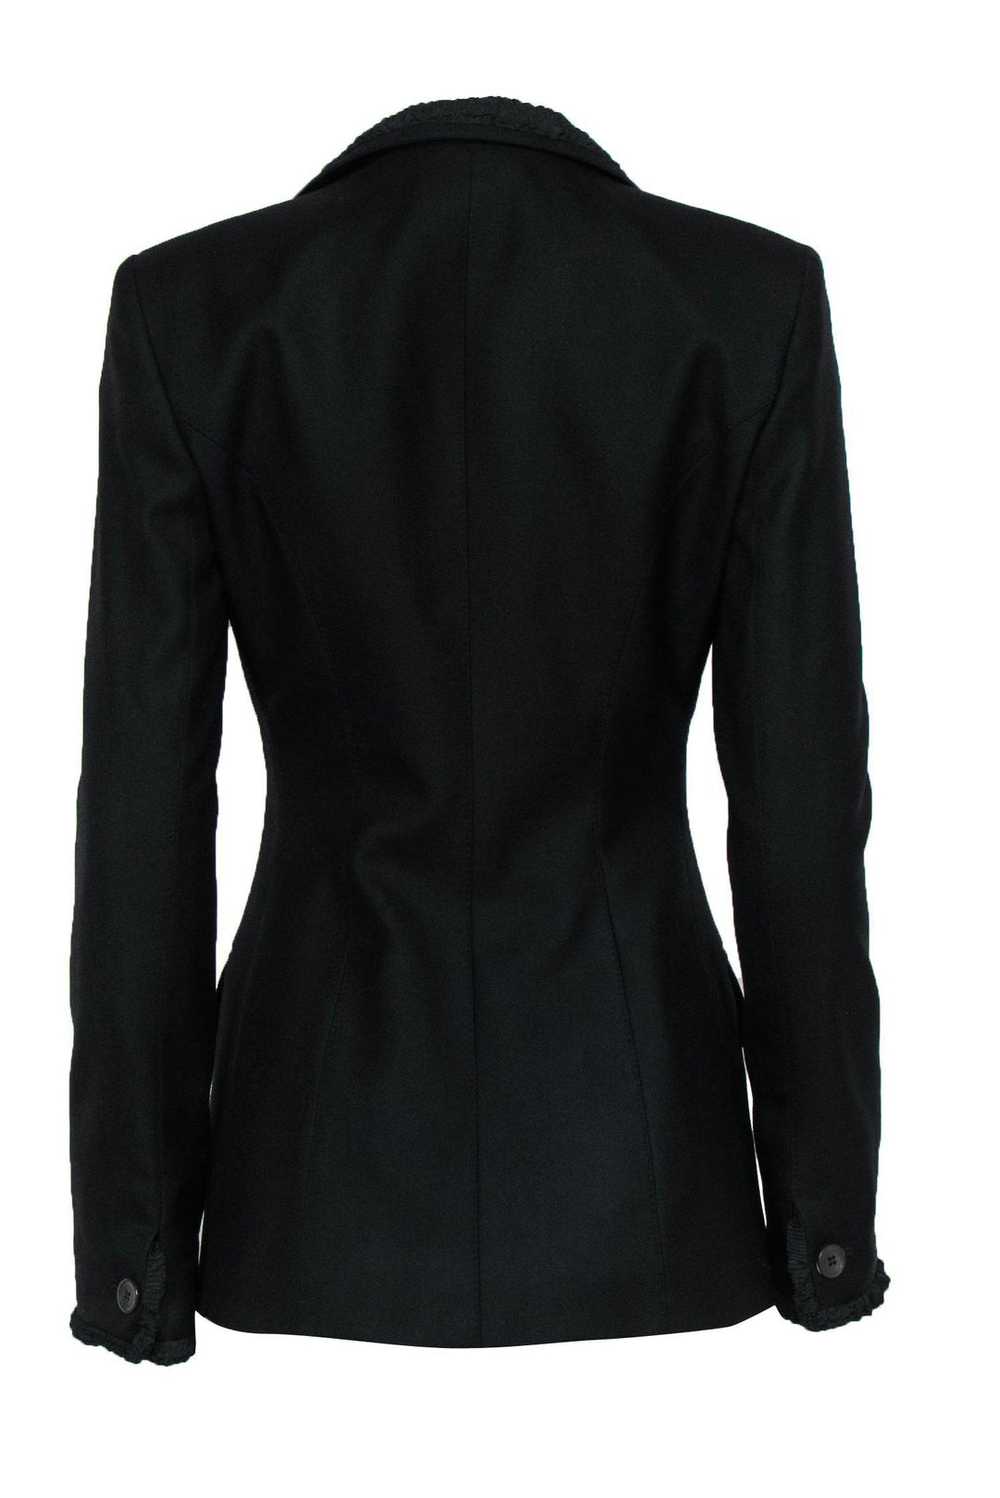 Yves Saint Laurent - Black Crinkled Ruched Wool J… - image 3